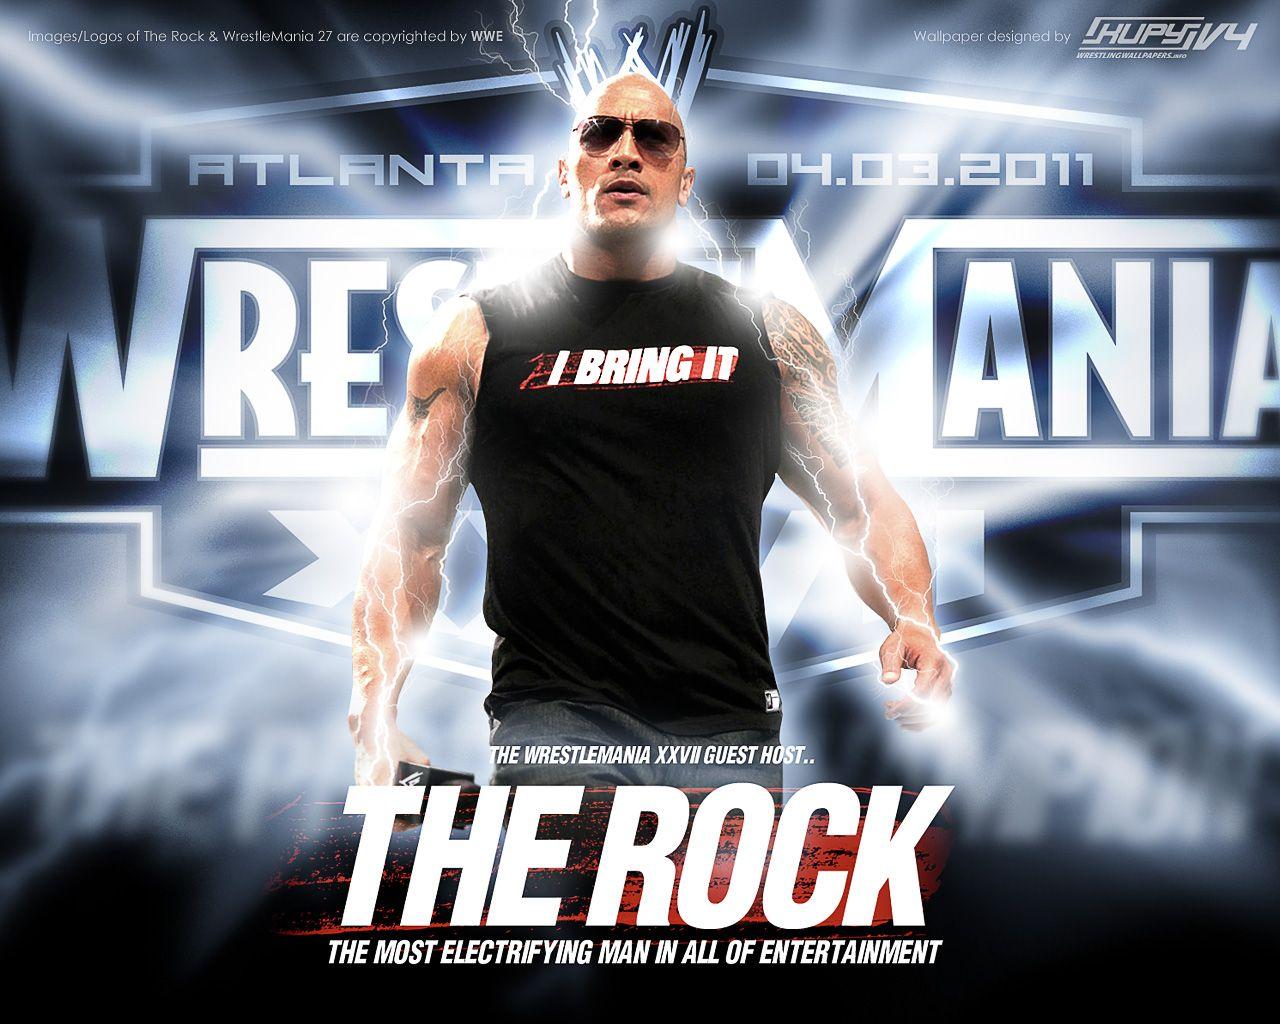 Famous Sports Personalities: Wwe The Rock HD Wallpaper 2012